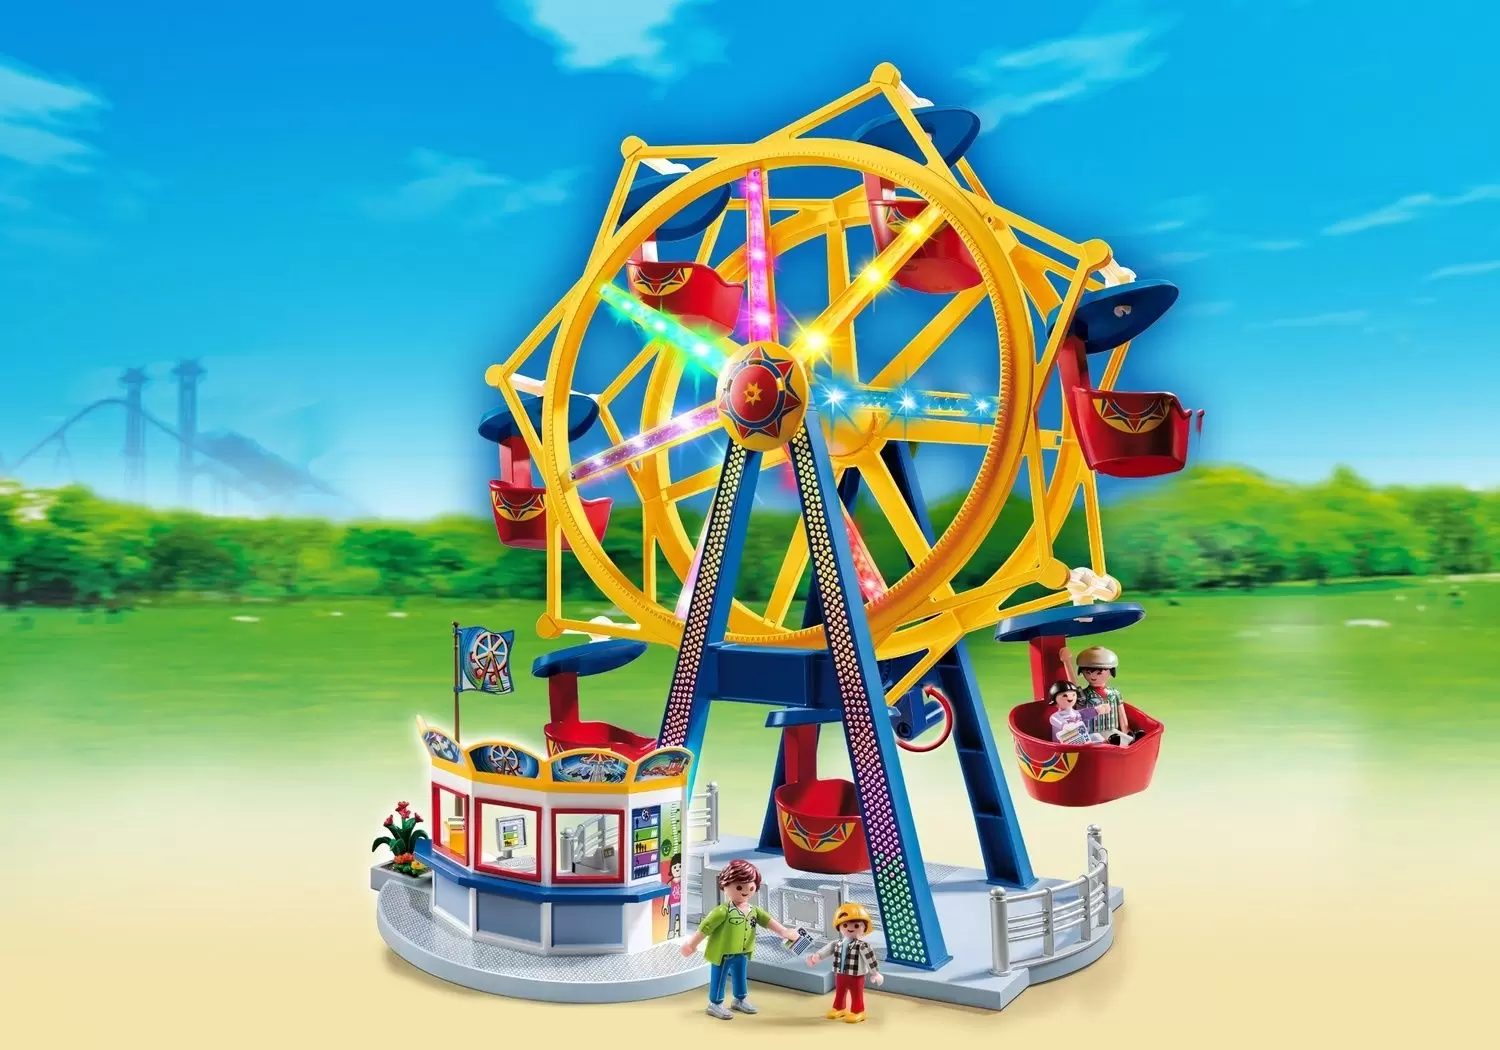 Playmobil en vacances - Grande roue avec illuminations